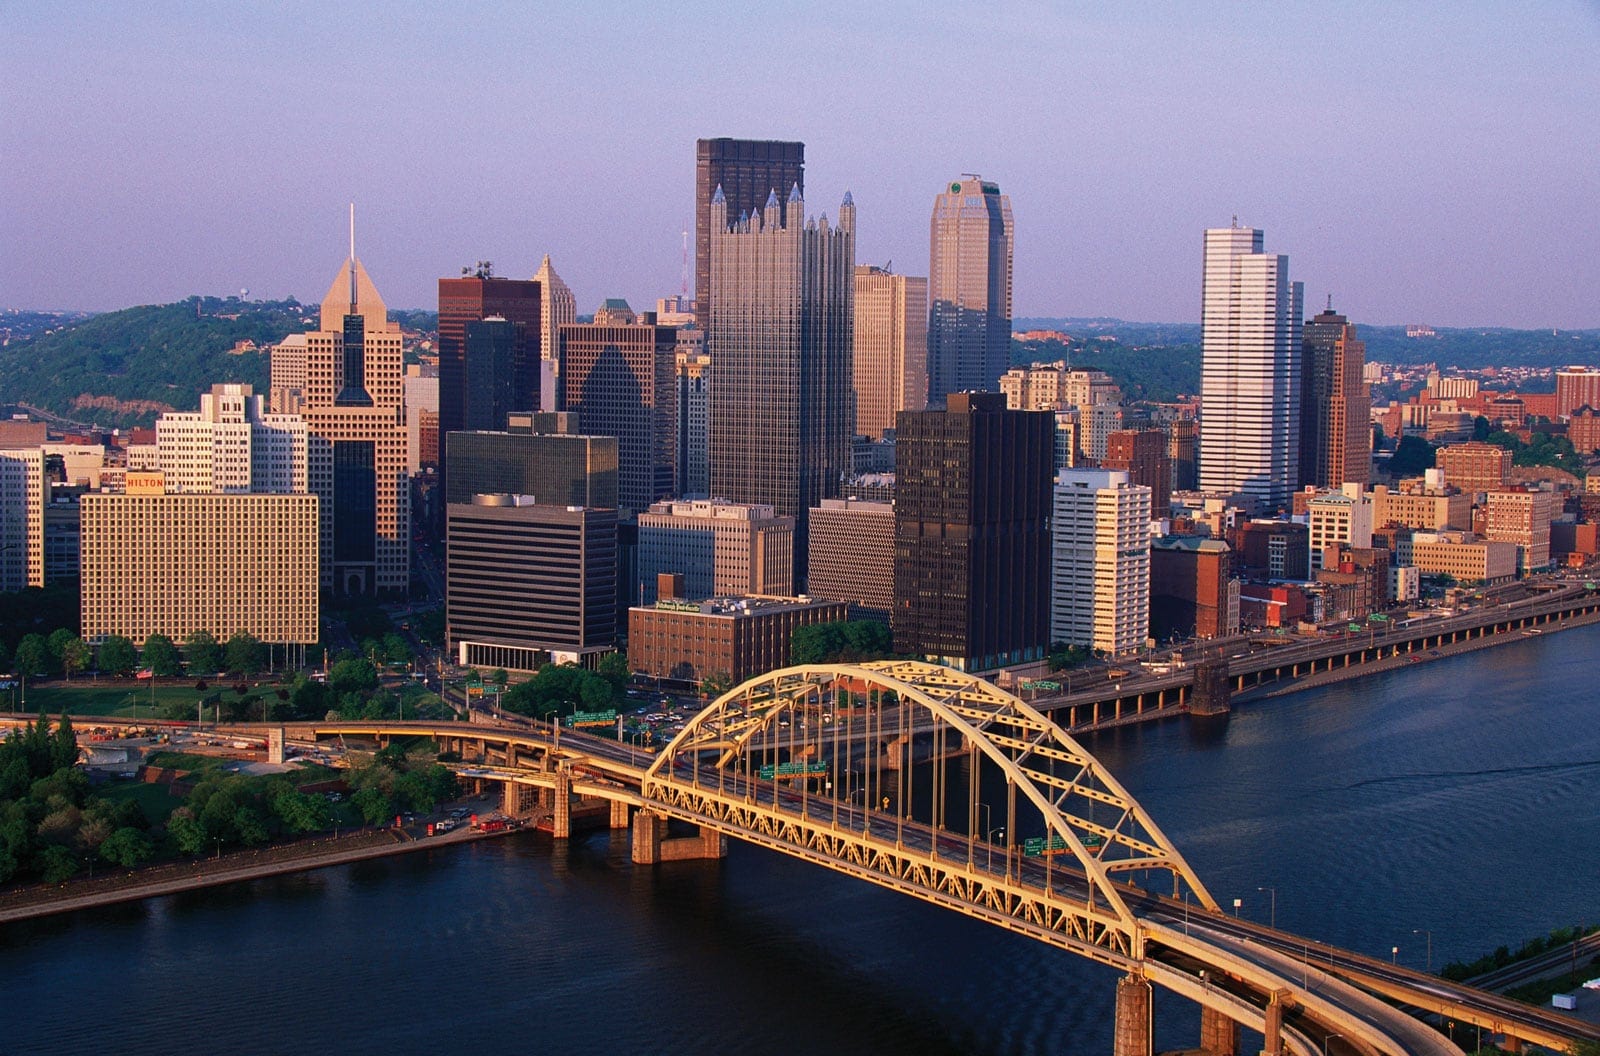 Pennsylvania city skyscraper view